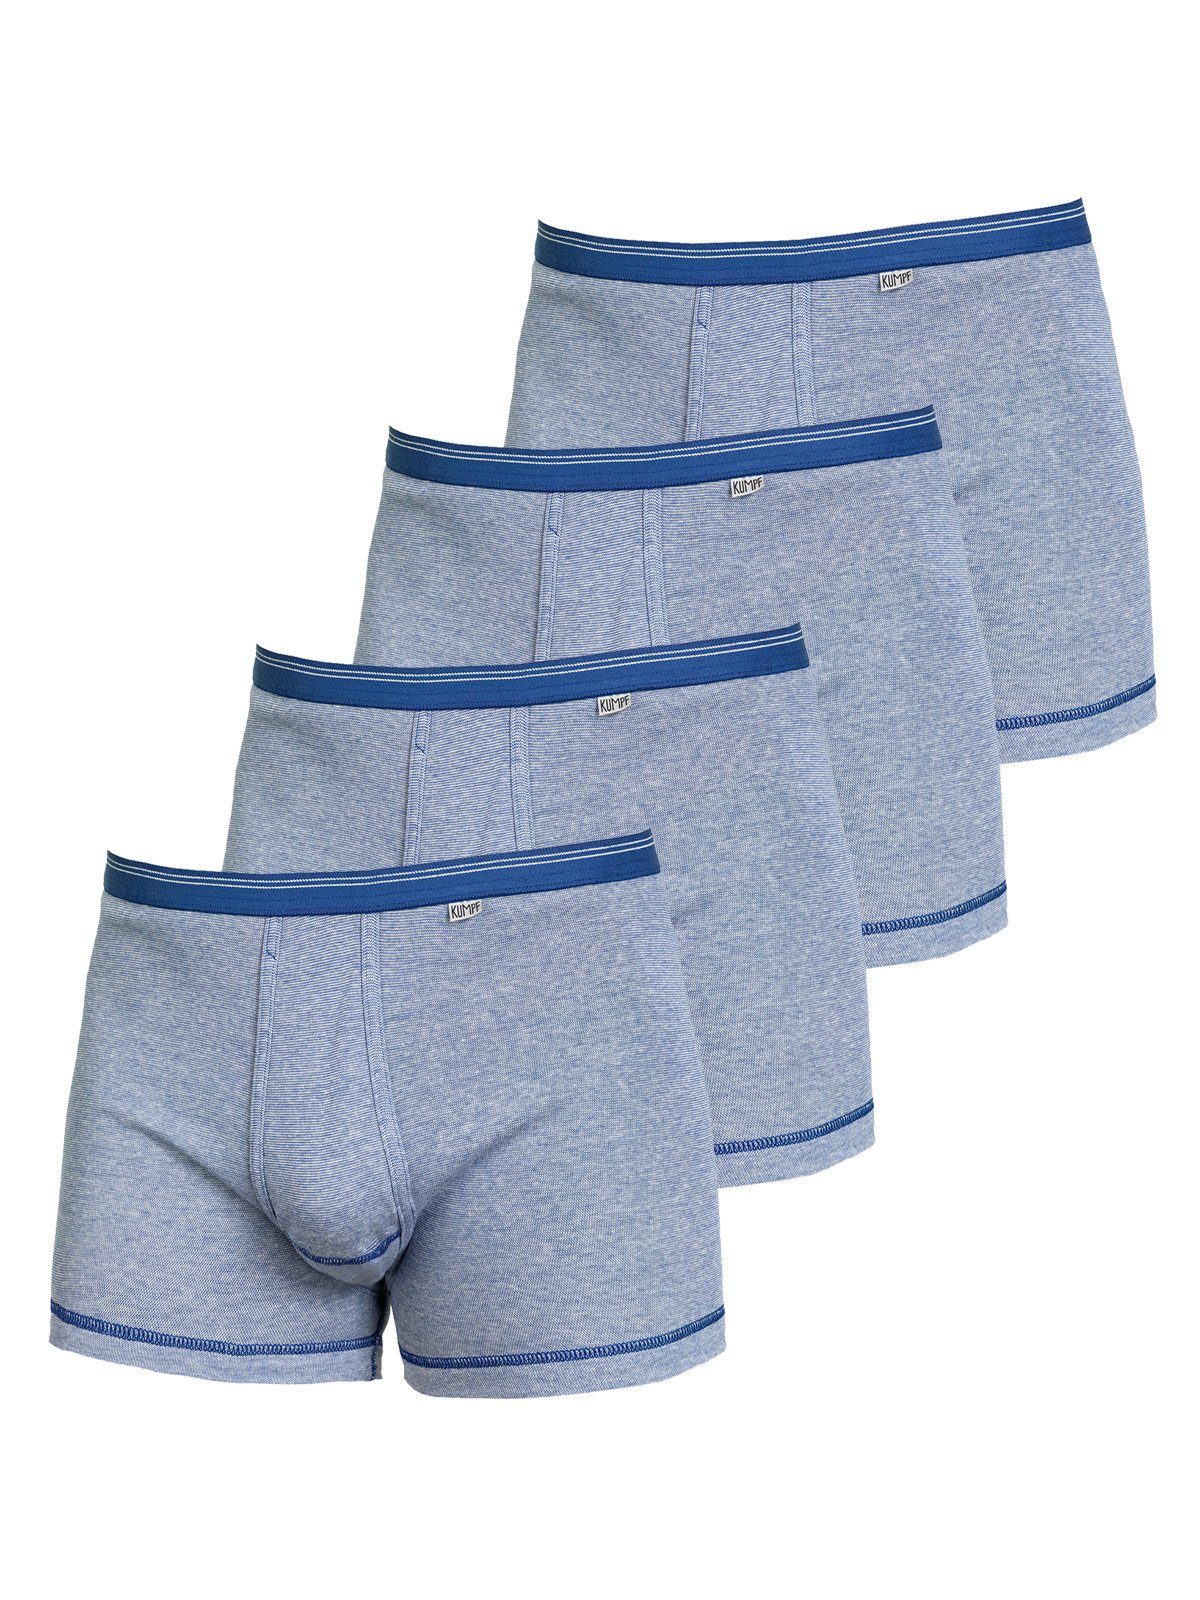 KUMPF Retro Pants 4er Sparpack Herren Short Feinripp Jeans (Spar-Set, 4-St) mit eingriff marine